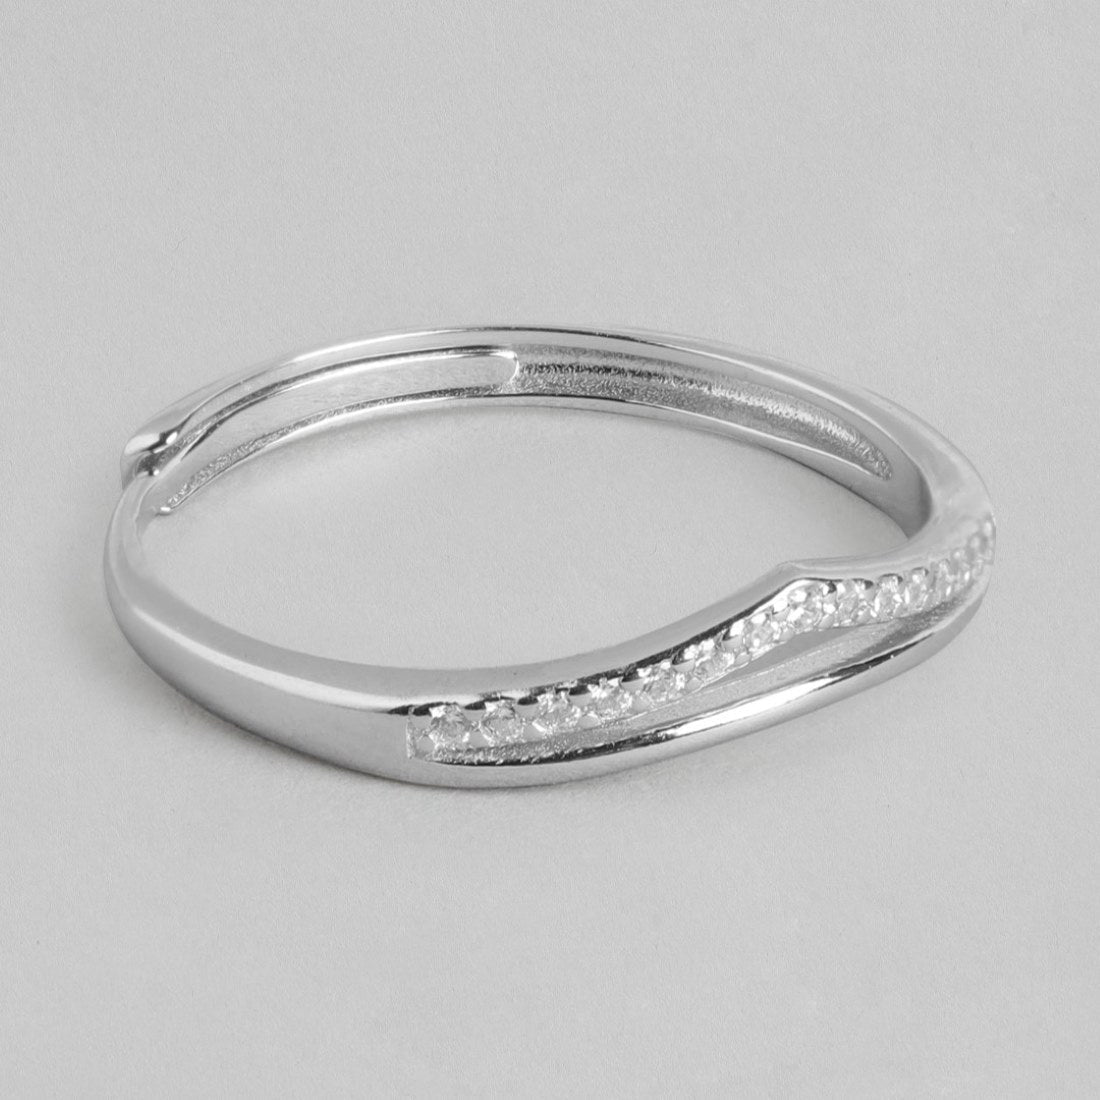 The Minimalist 925 Silver Ring Gift Hamper